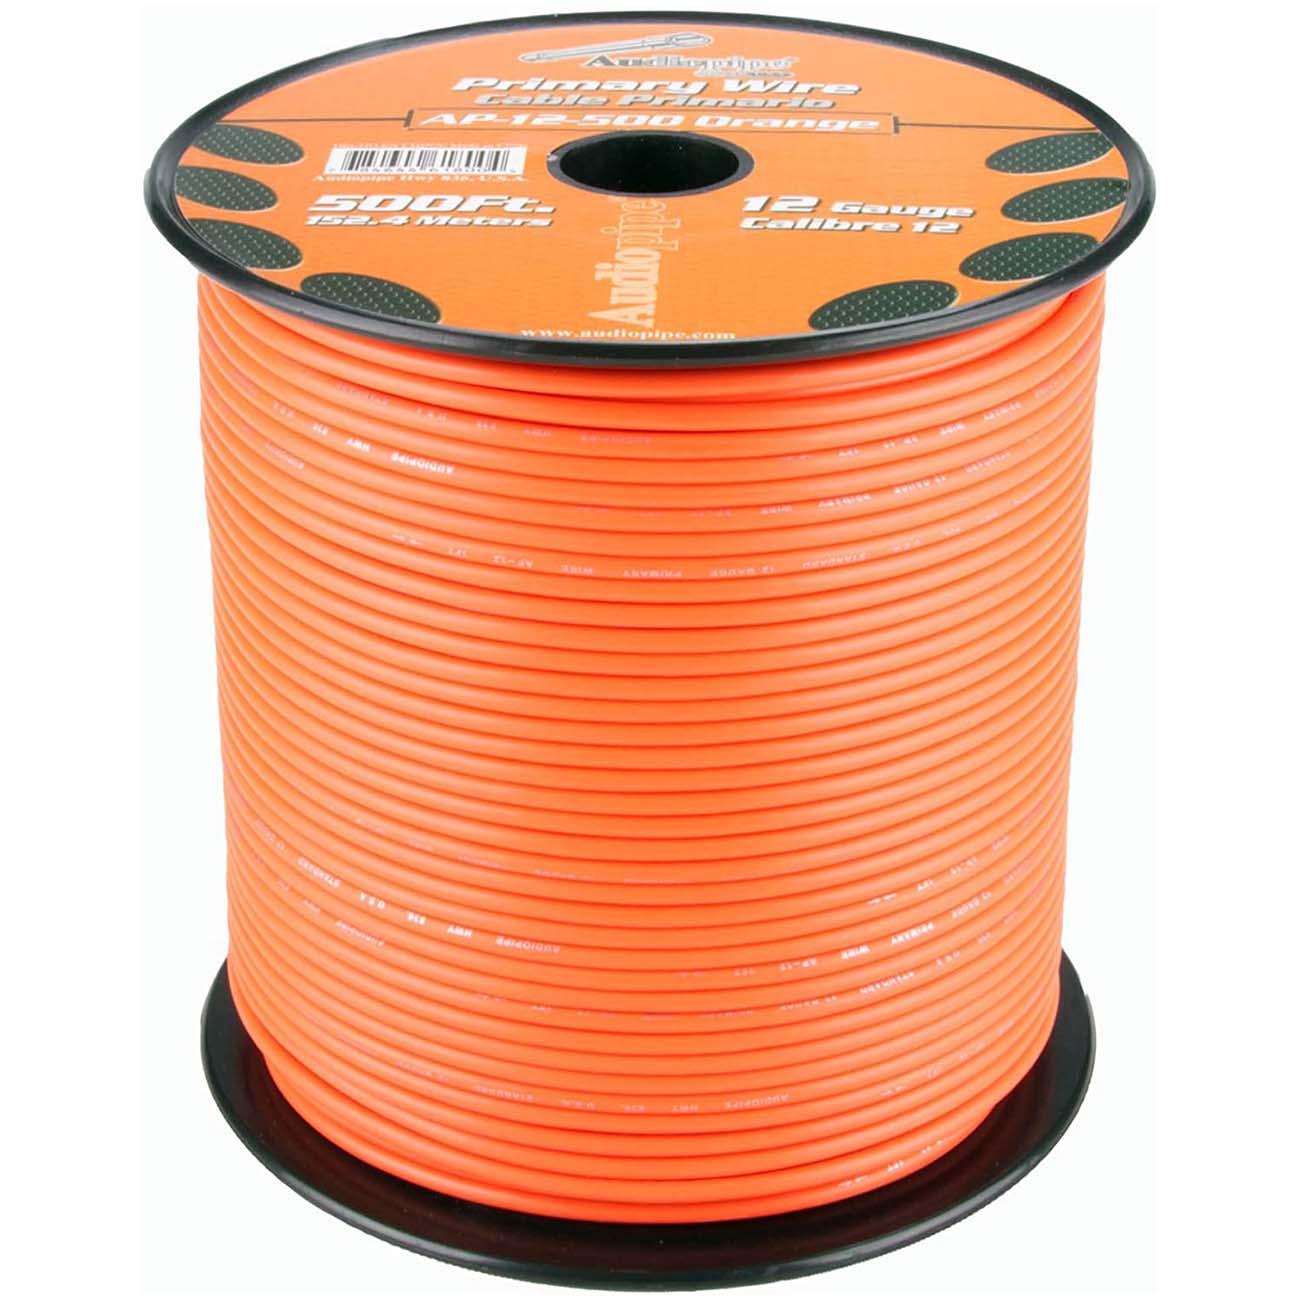 Audiopipe AP12500OR 12 Gauge 500Ft Primary Wire Orange